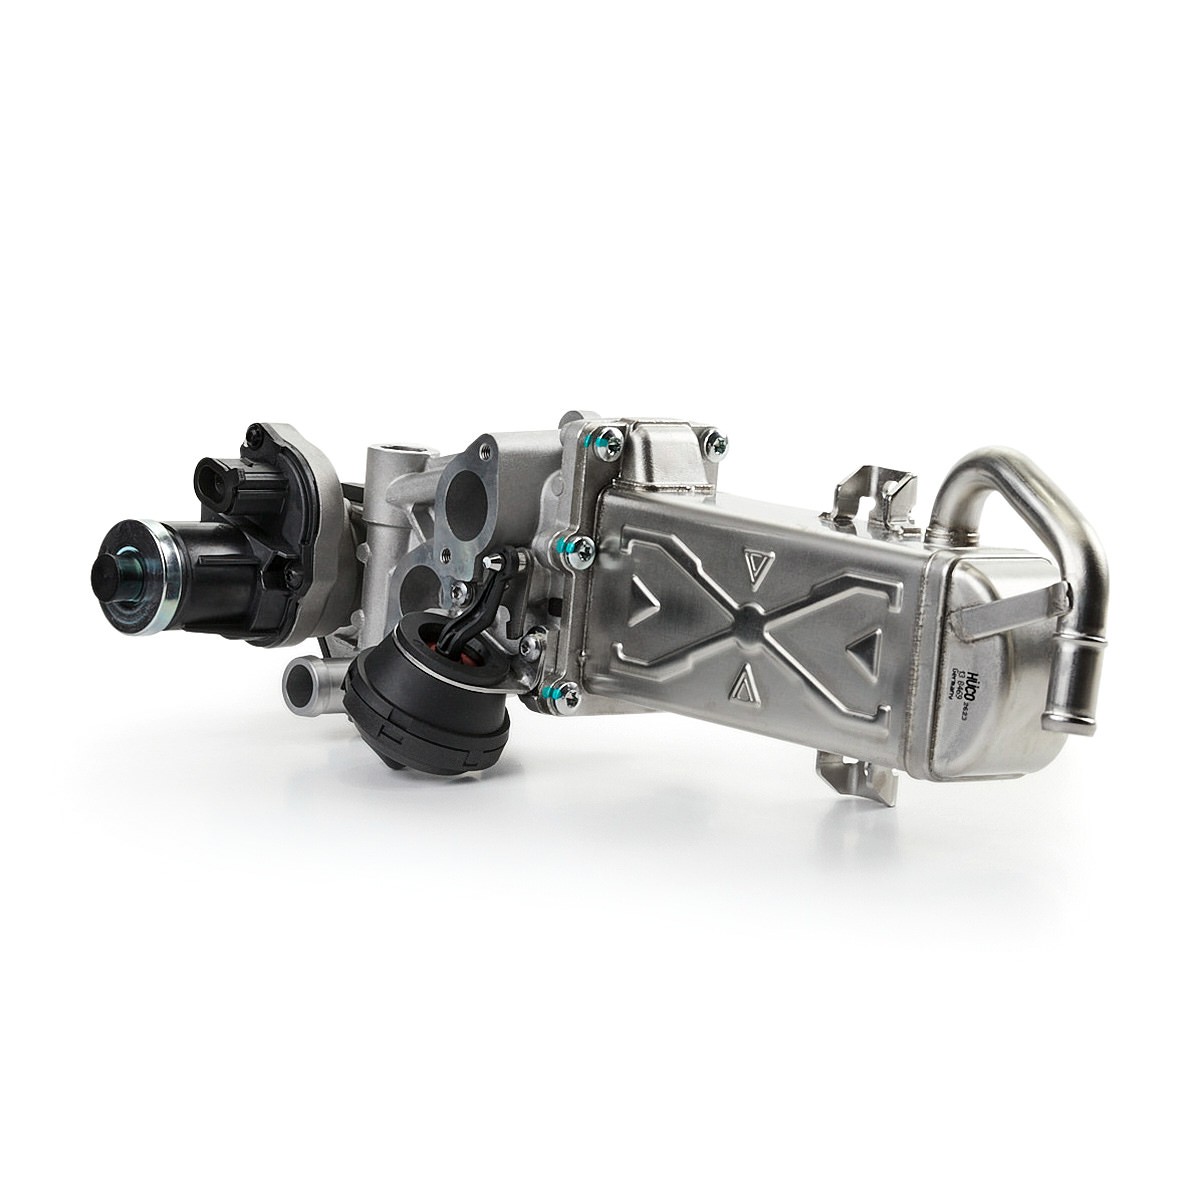 138469 Exhaust gas recirculation valve Hueco HITACHI 138469 review and test